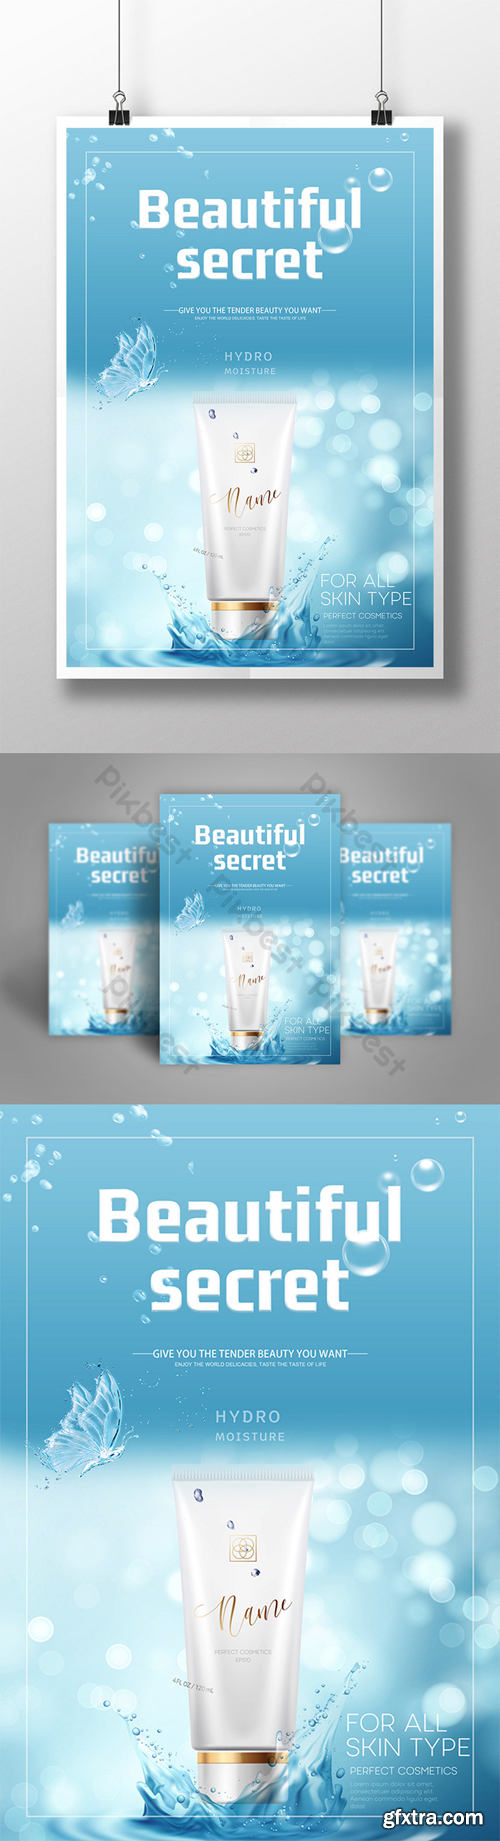 Beautiful secret cosmetics poster Template PSD